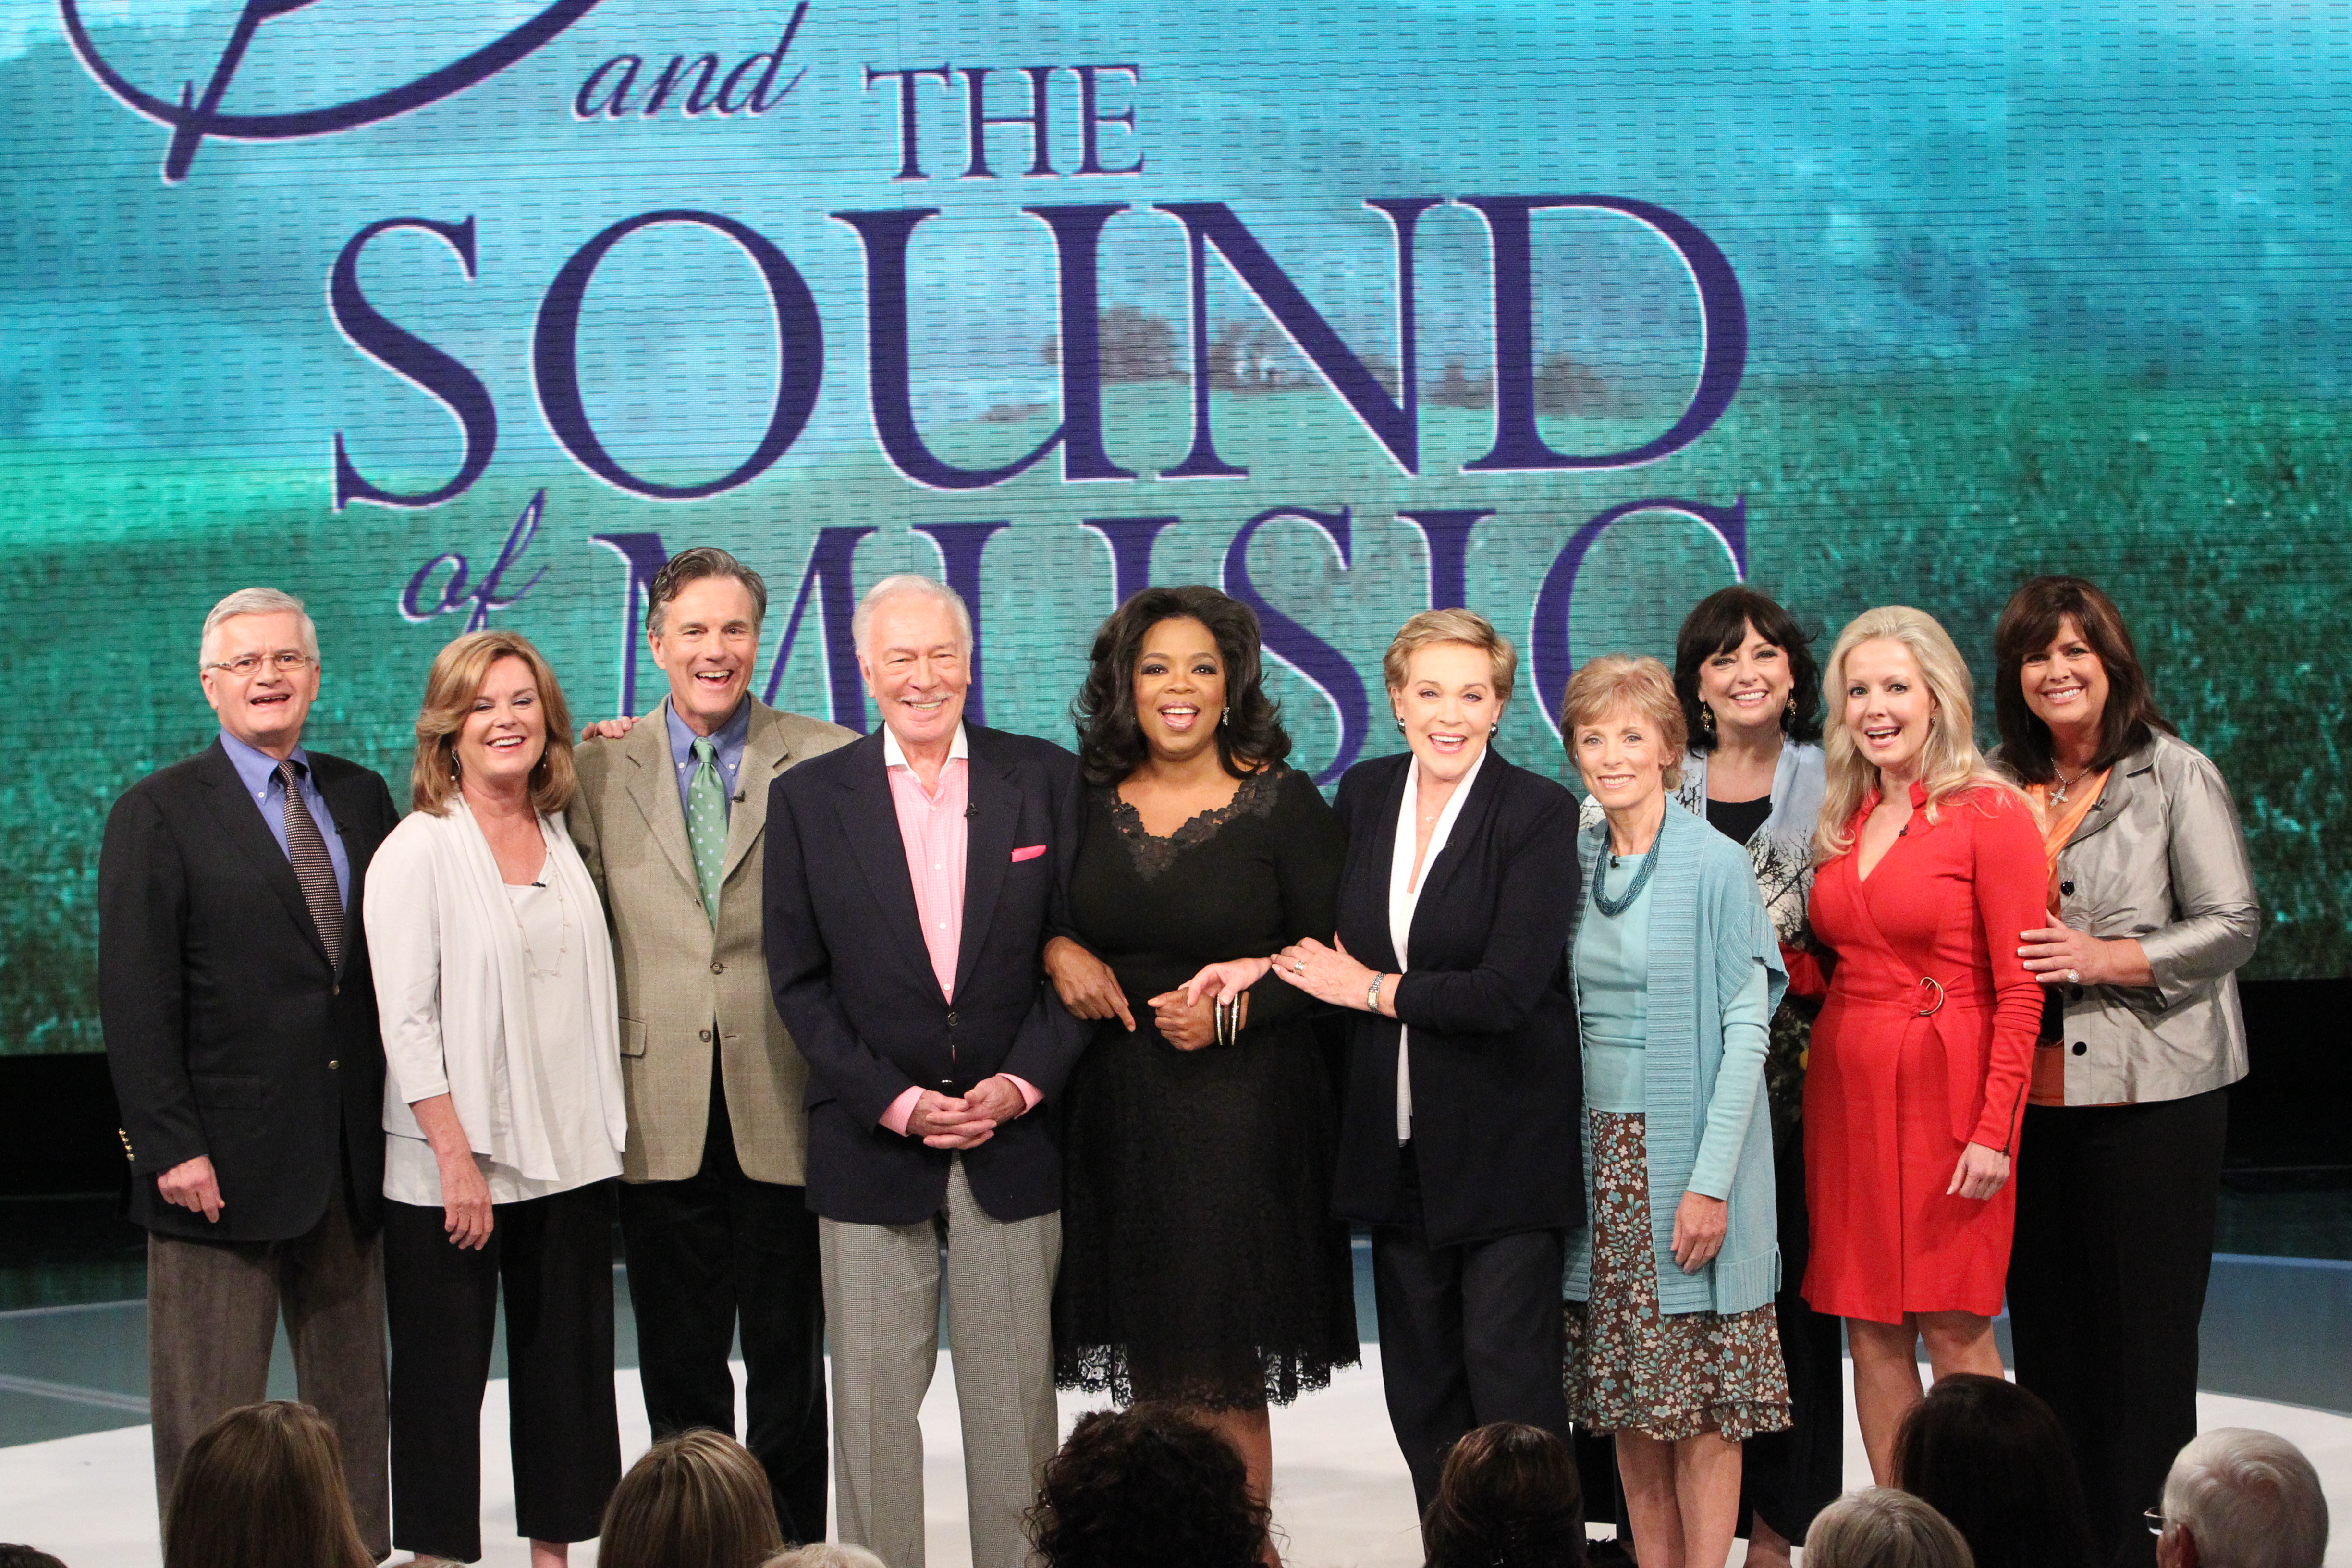 DVR Reminder: “The Sound of Music” cast on Oprah